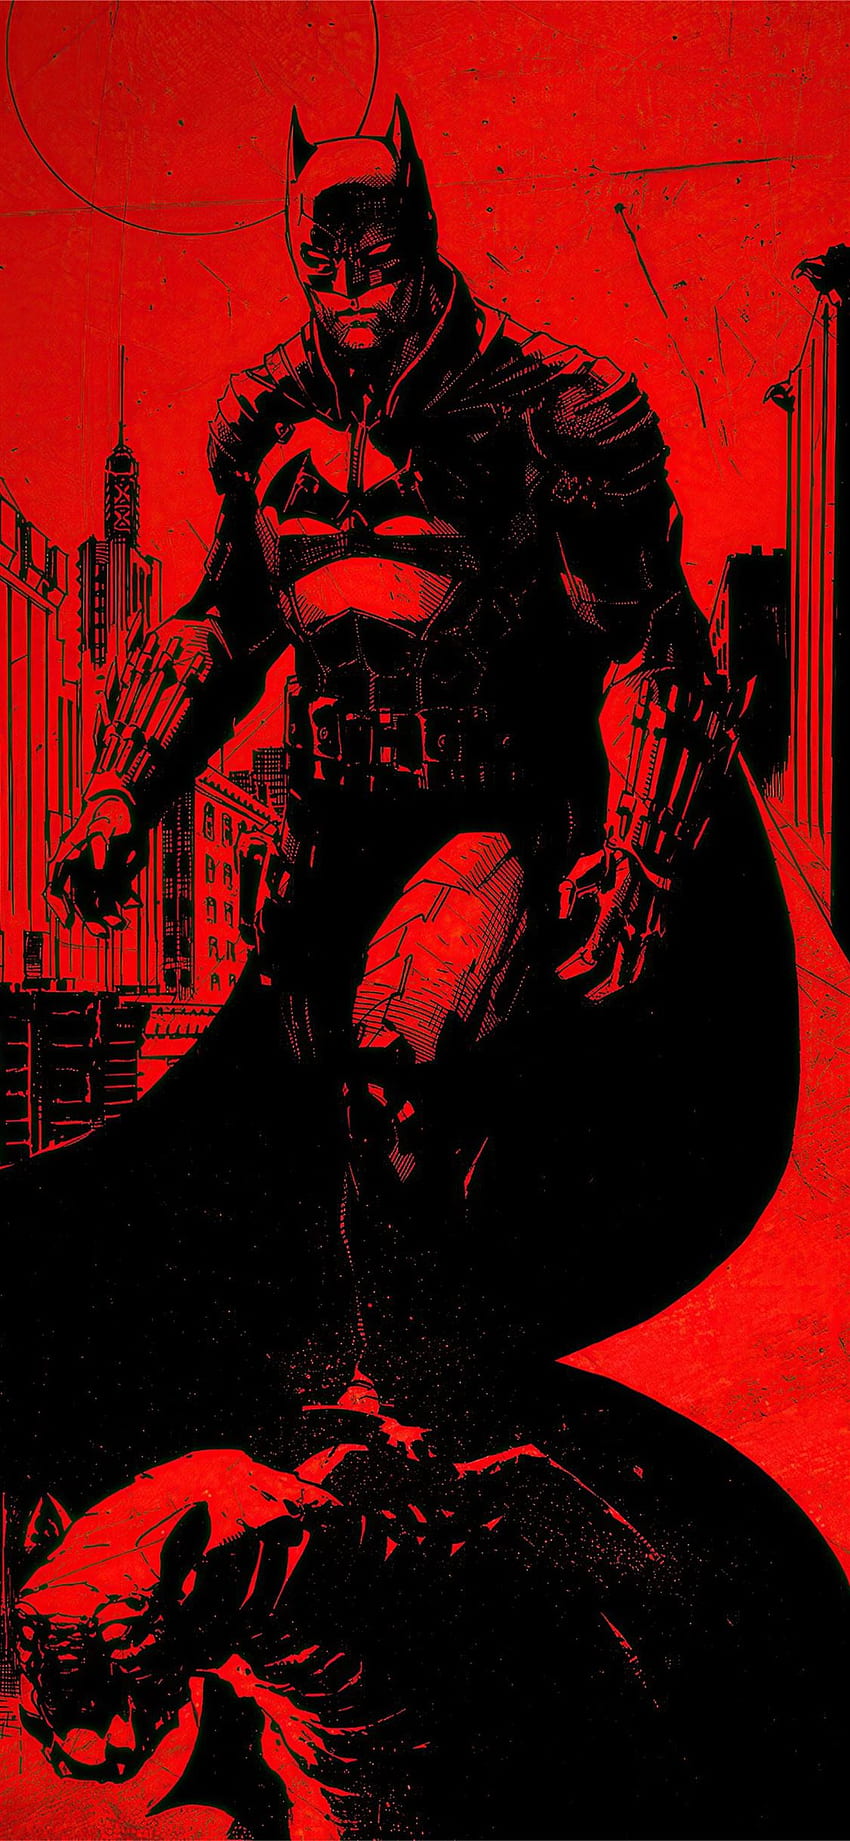 Download wallpaper 1280x2120 minimal poster dark the batman movie 2022  iphone 6 plus 1280x2120 hd background 27827